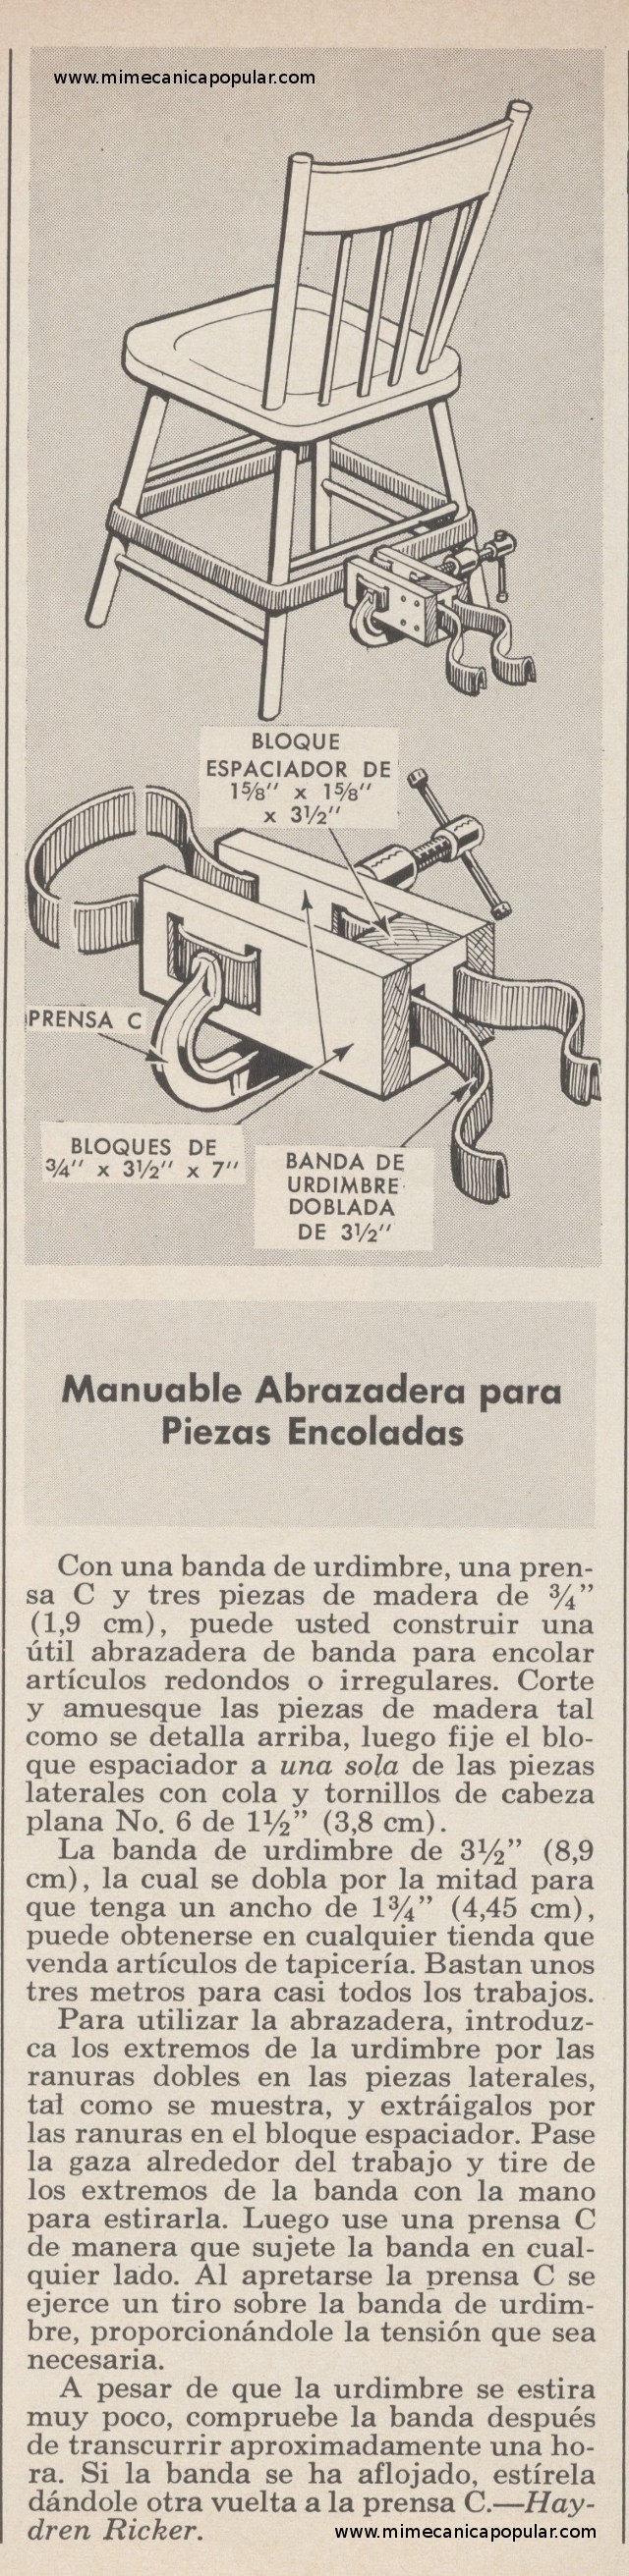 Manuable abrazadera para piezas encoladas - Abril 1965